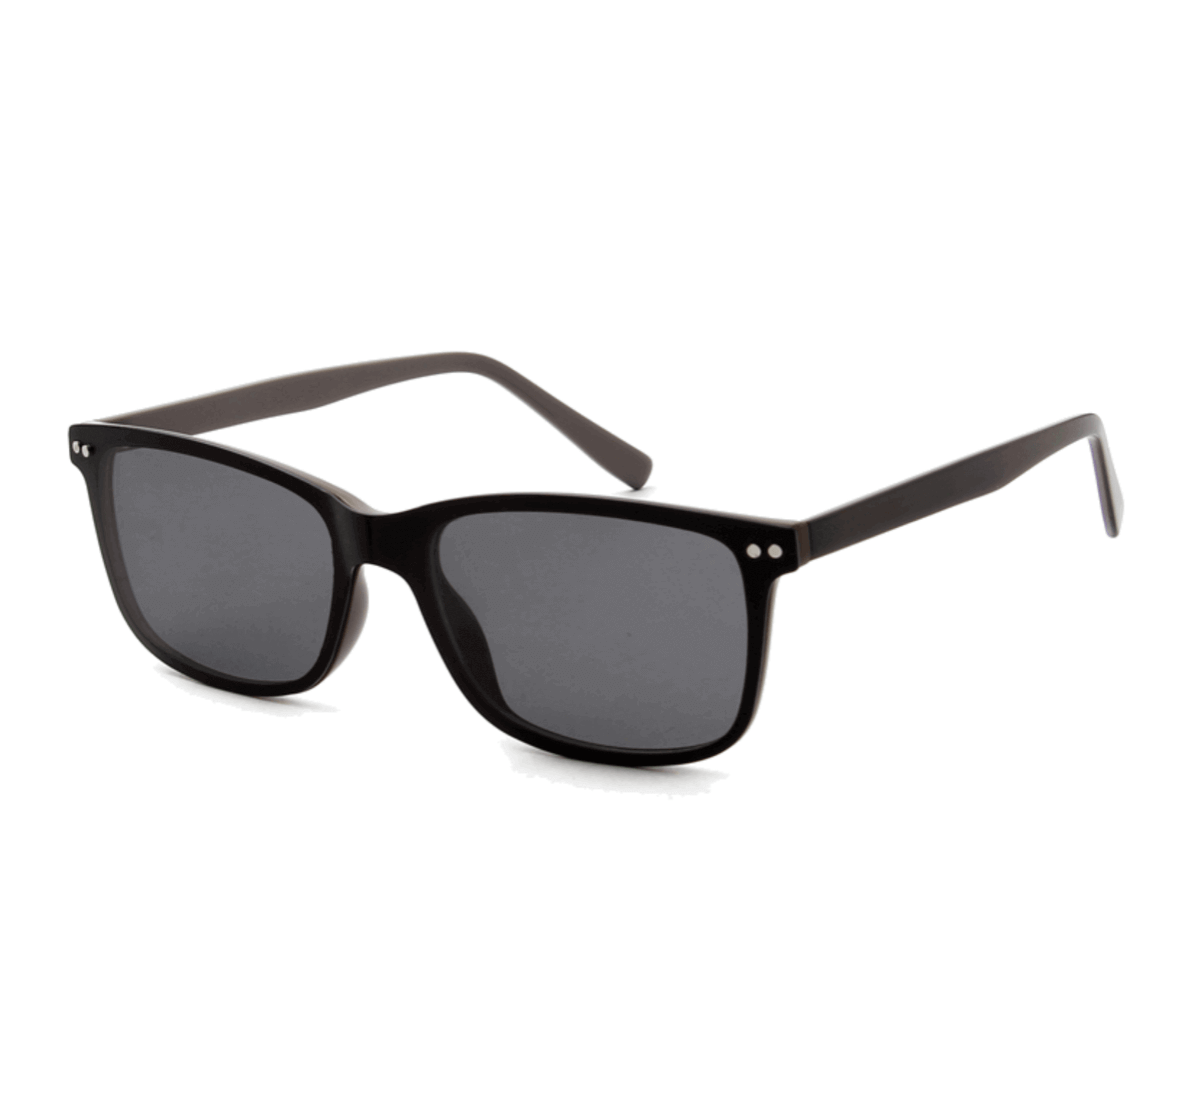 men's acetate sunglasses, acetate sunglasses manufacturer, sunglasses supplier, eyewear manufacturers in china, factory eyewear, glasses manufacturer China